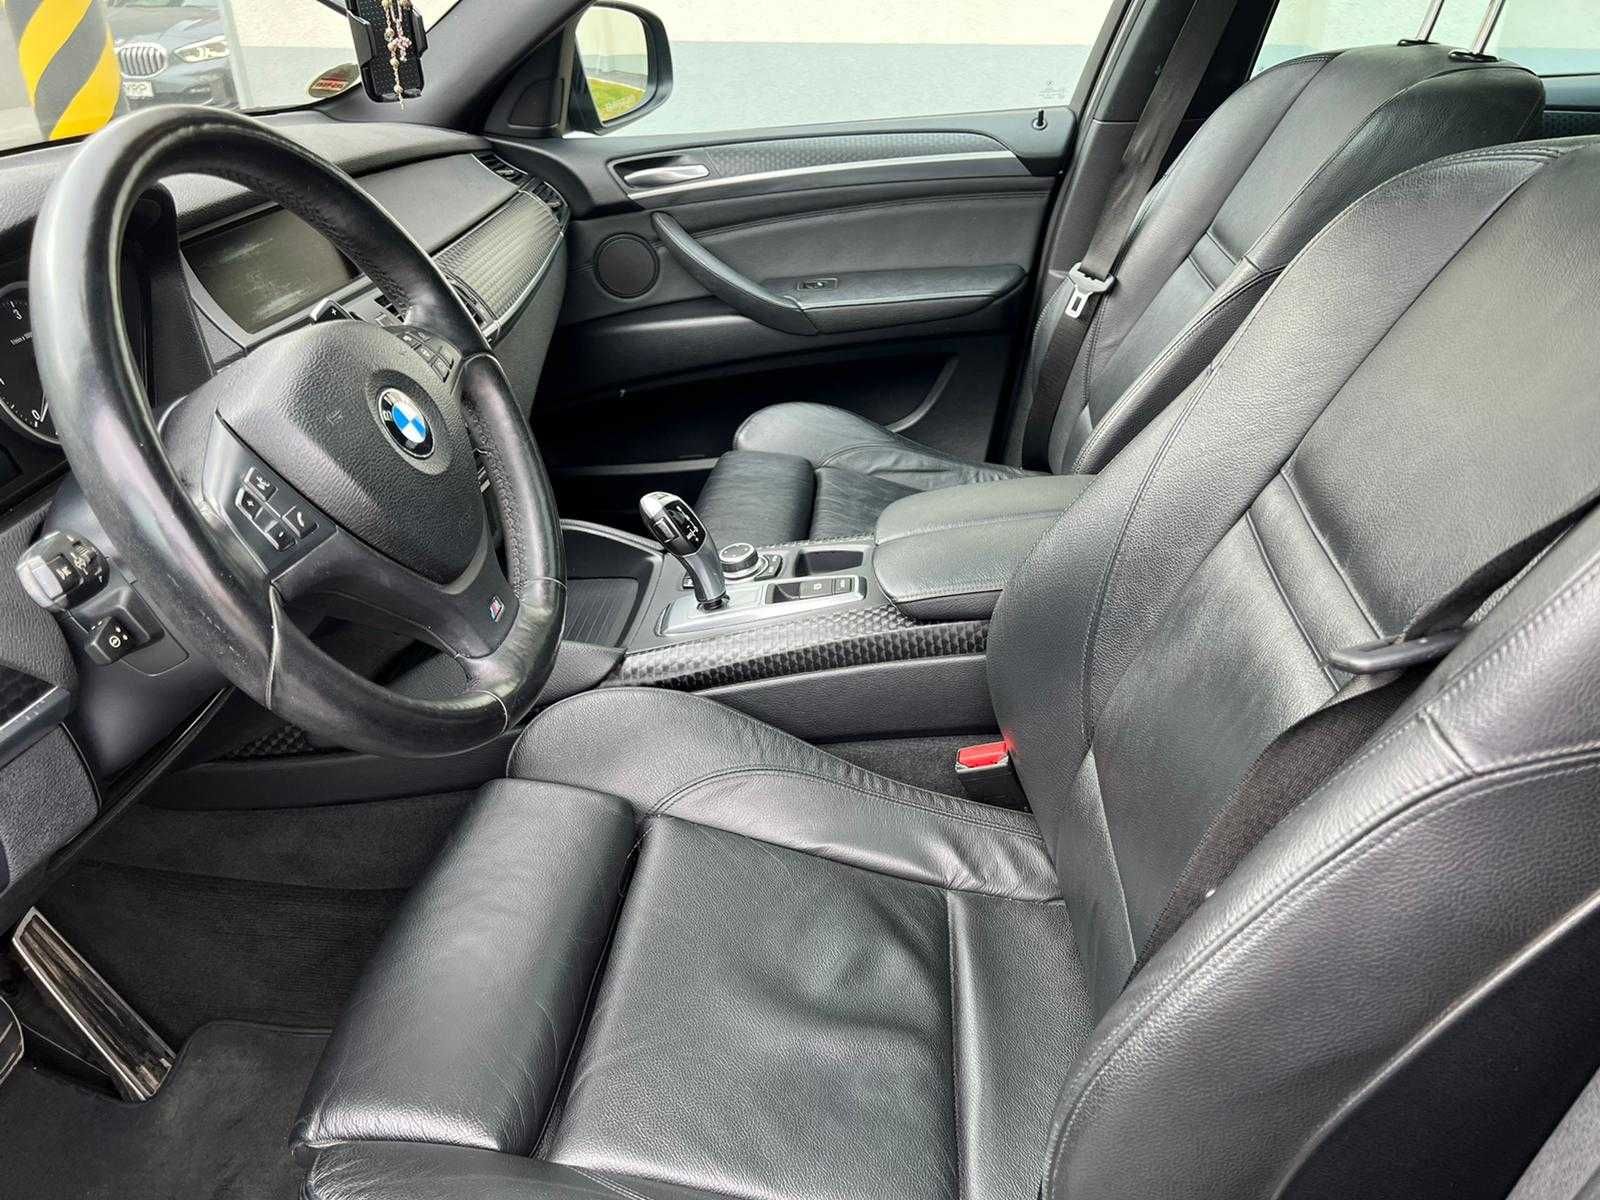 Vand BMW X6 ,X Drive ,3000 D,an fabricatie 2013,rulaj 110000 km